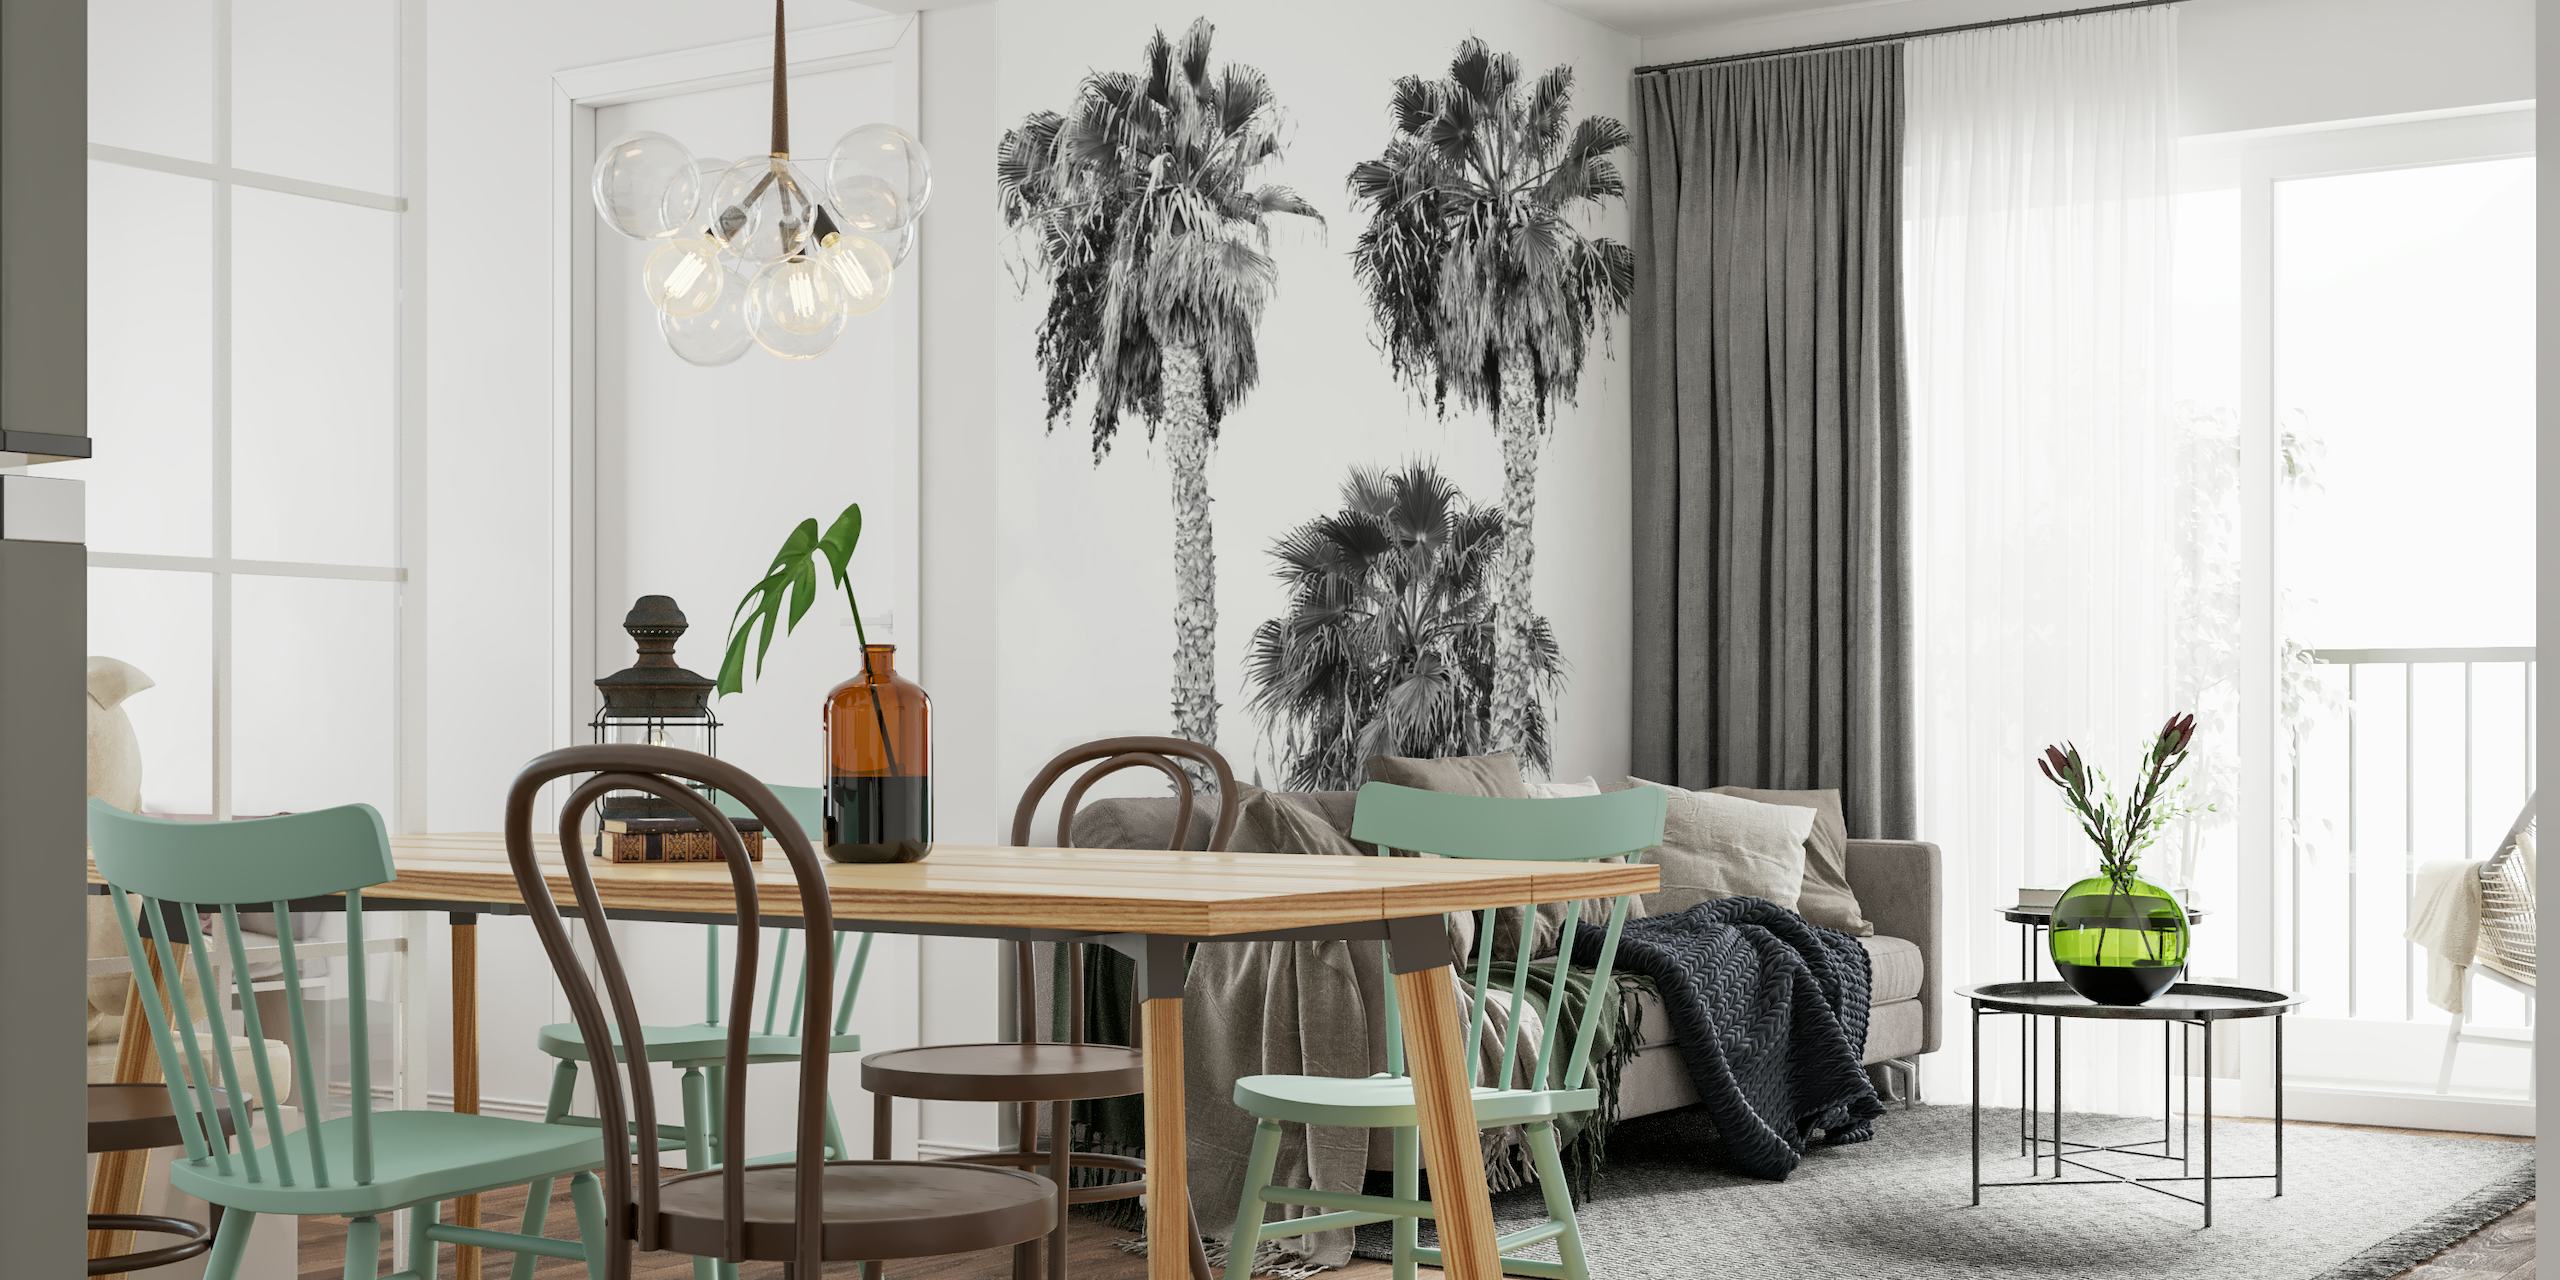 Palm Trees 4a wallpaper